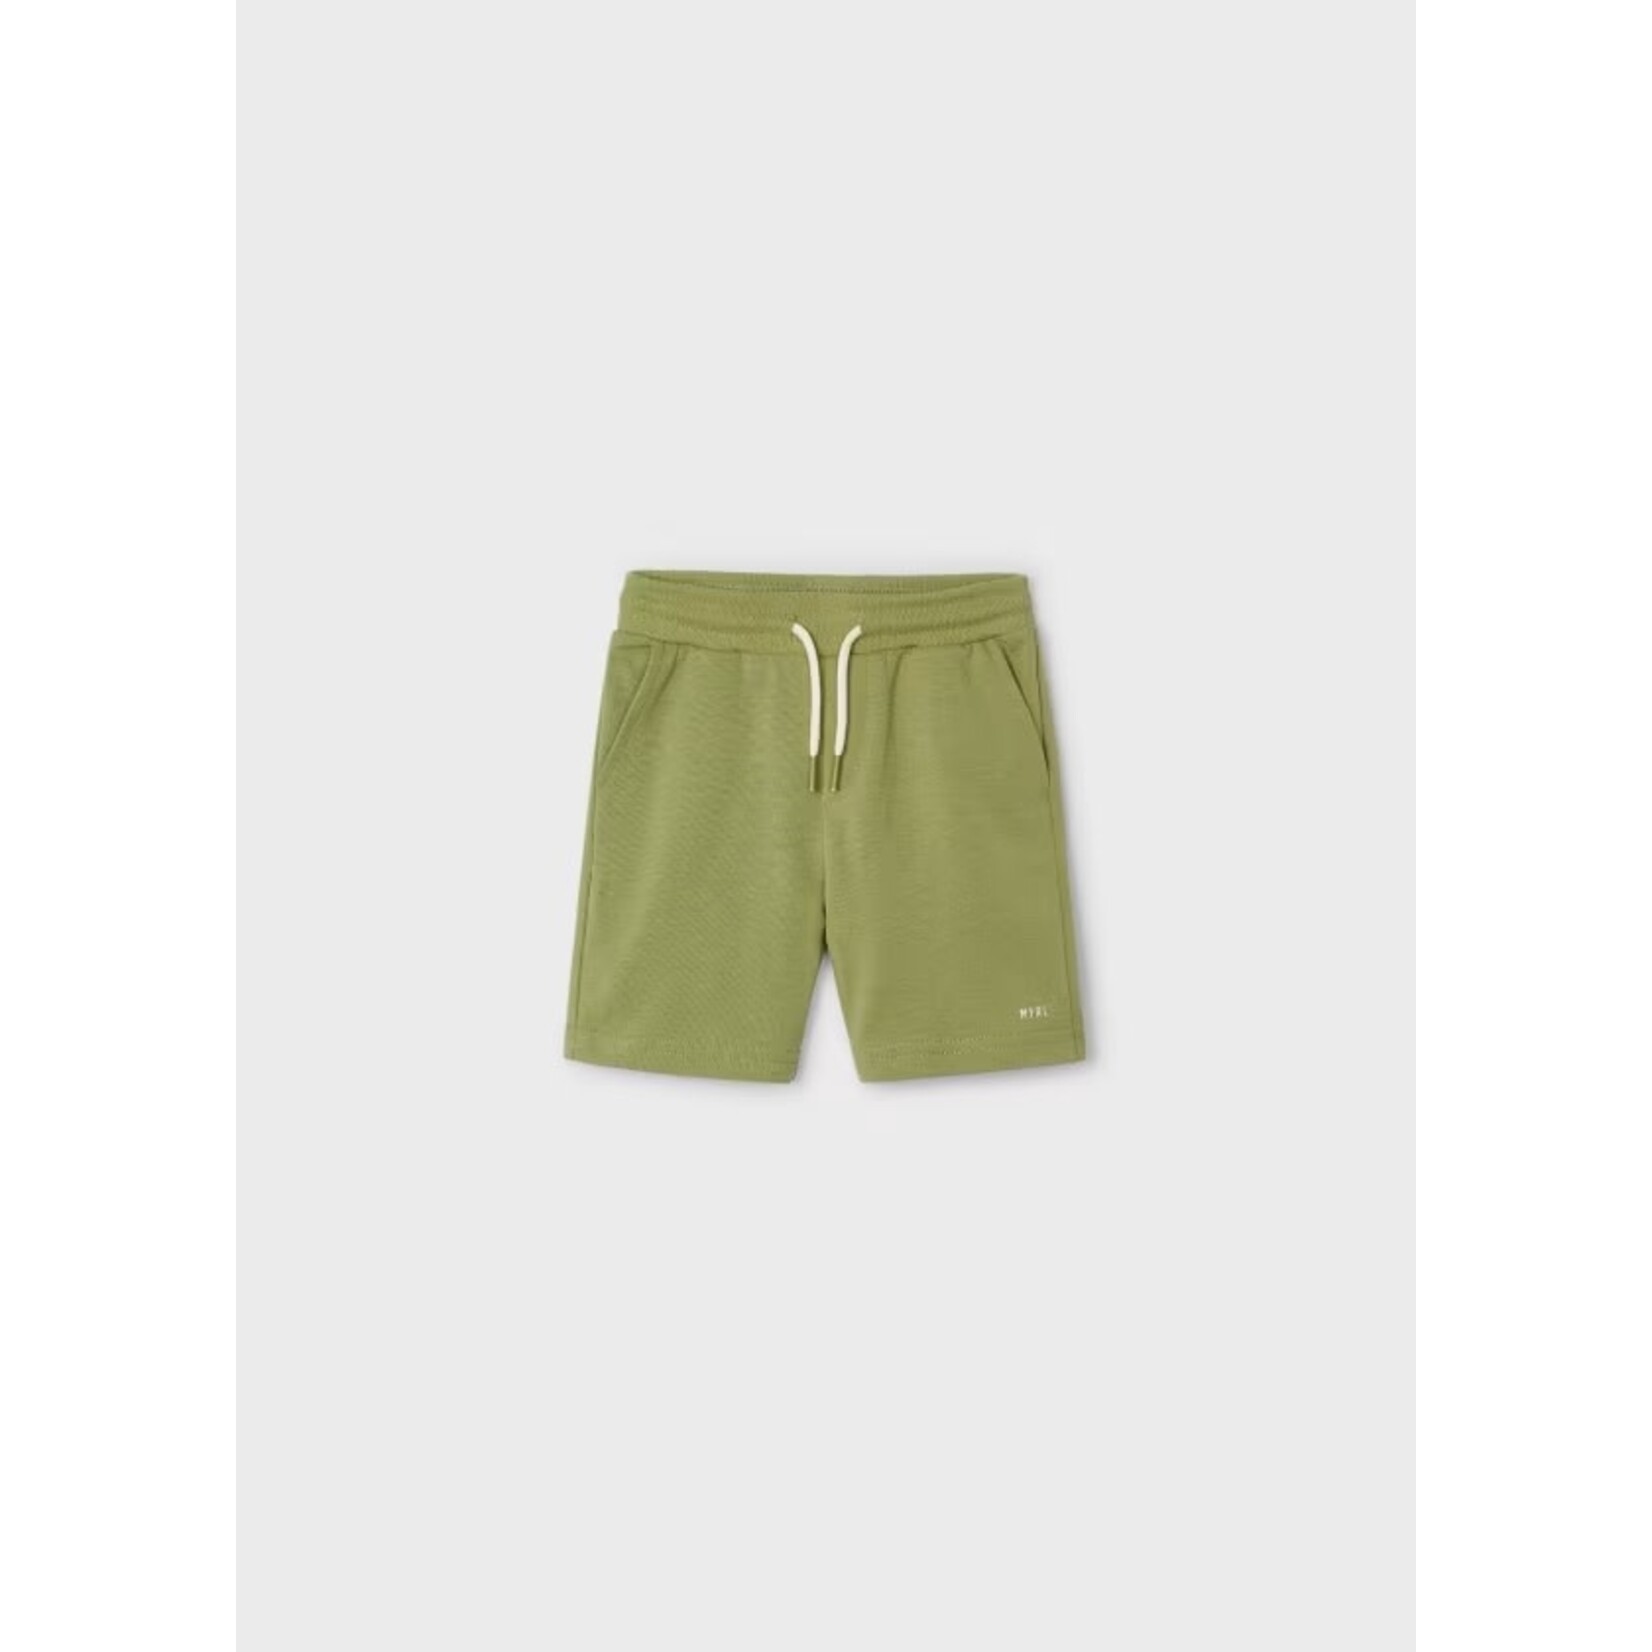 Mayoral MAYORAL - Cotton jersey shorts - Sage green